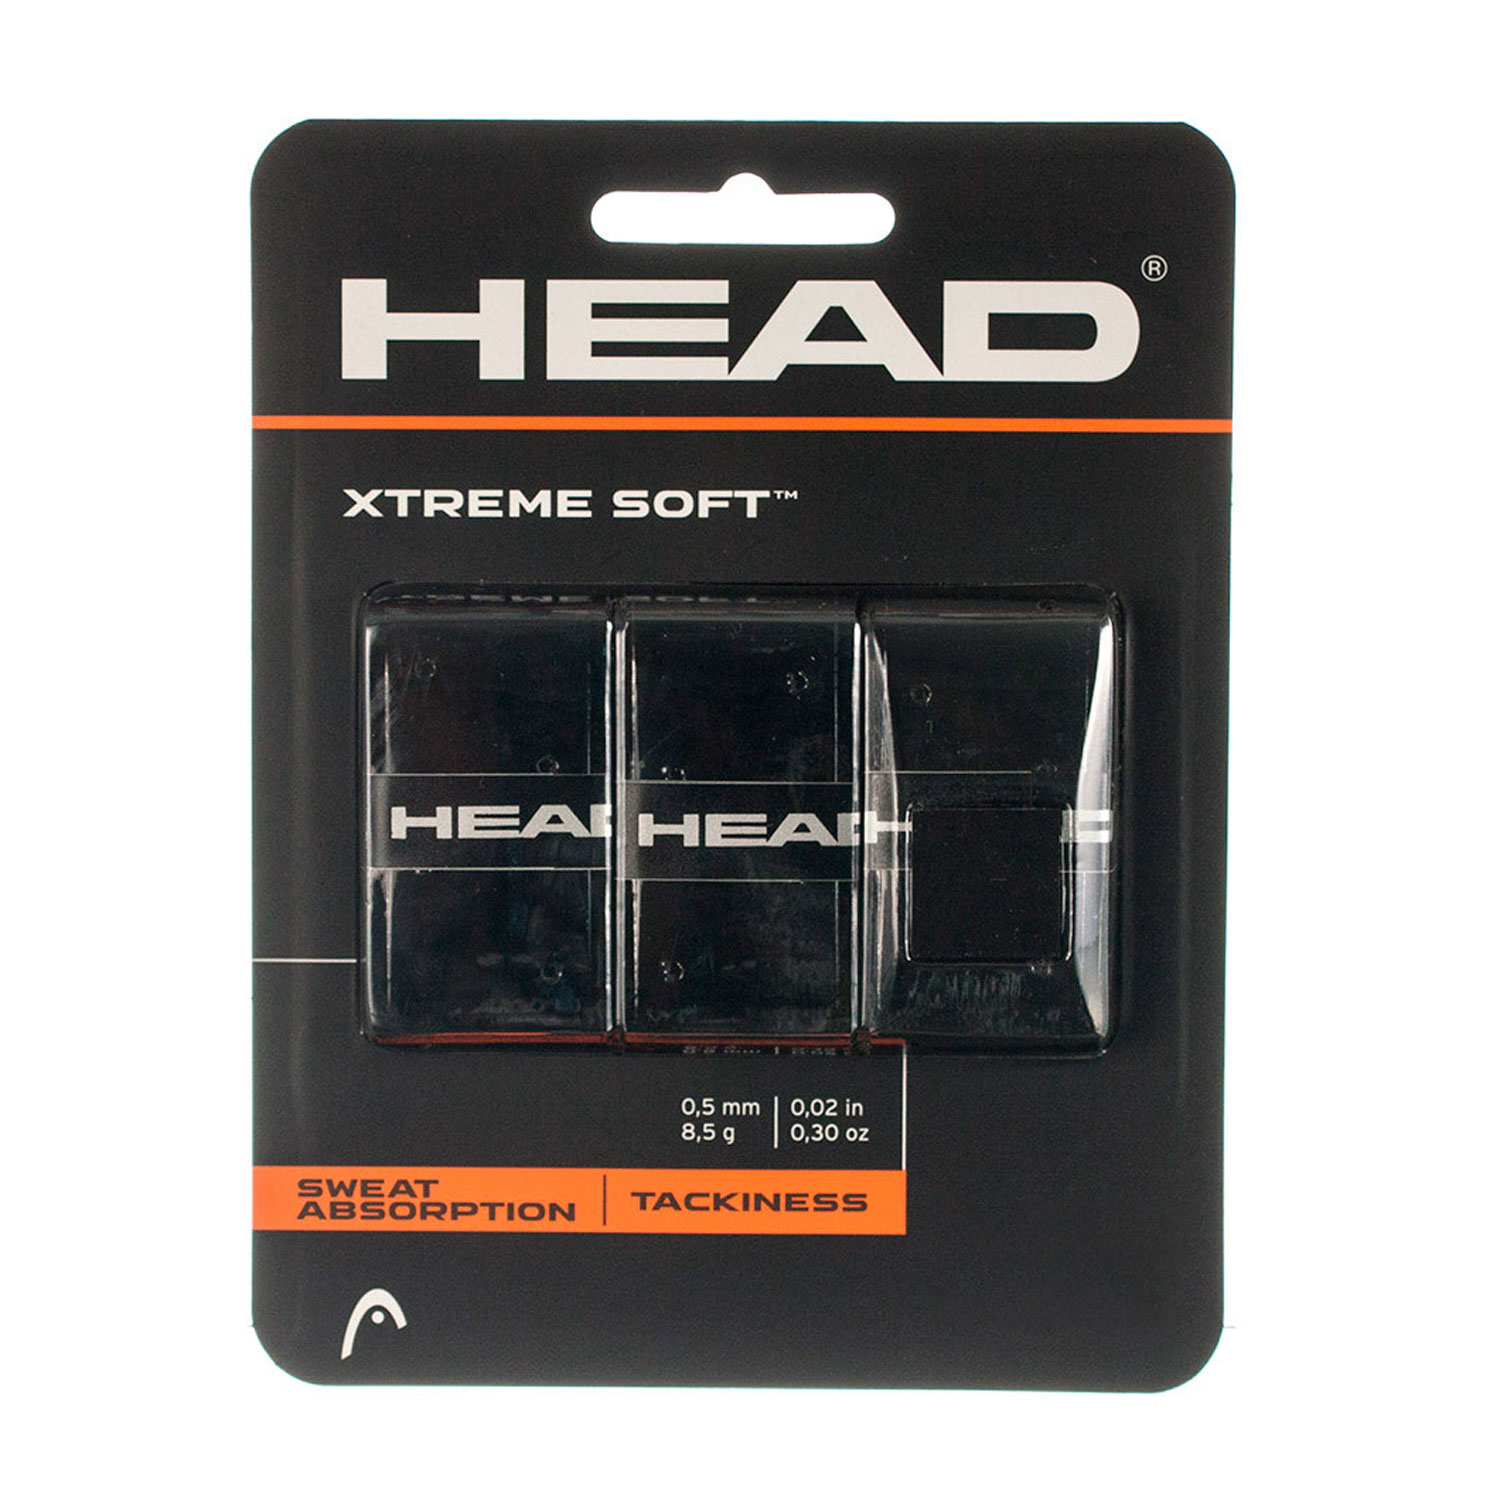 Head Xtreme Soft Overgrip x 3 - Black